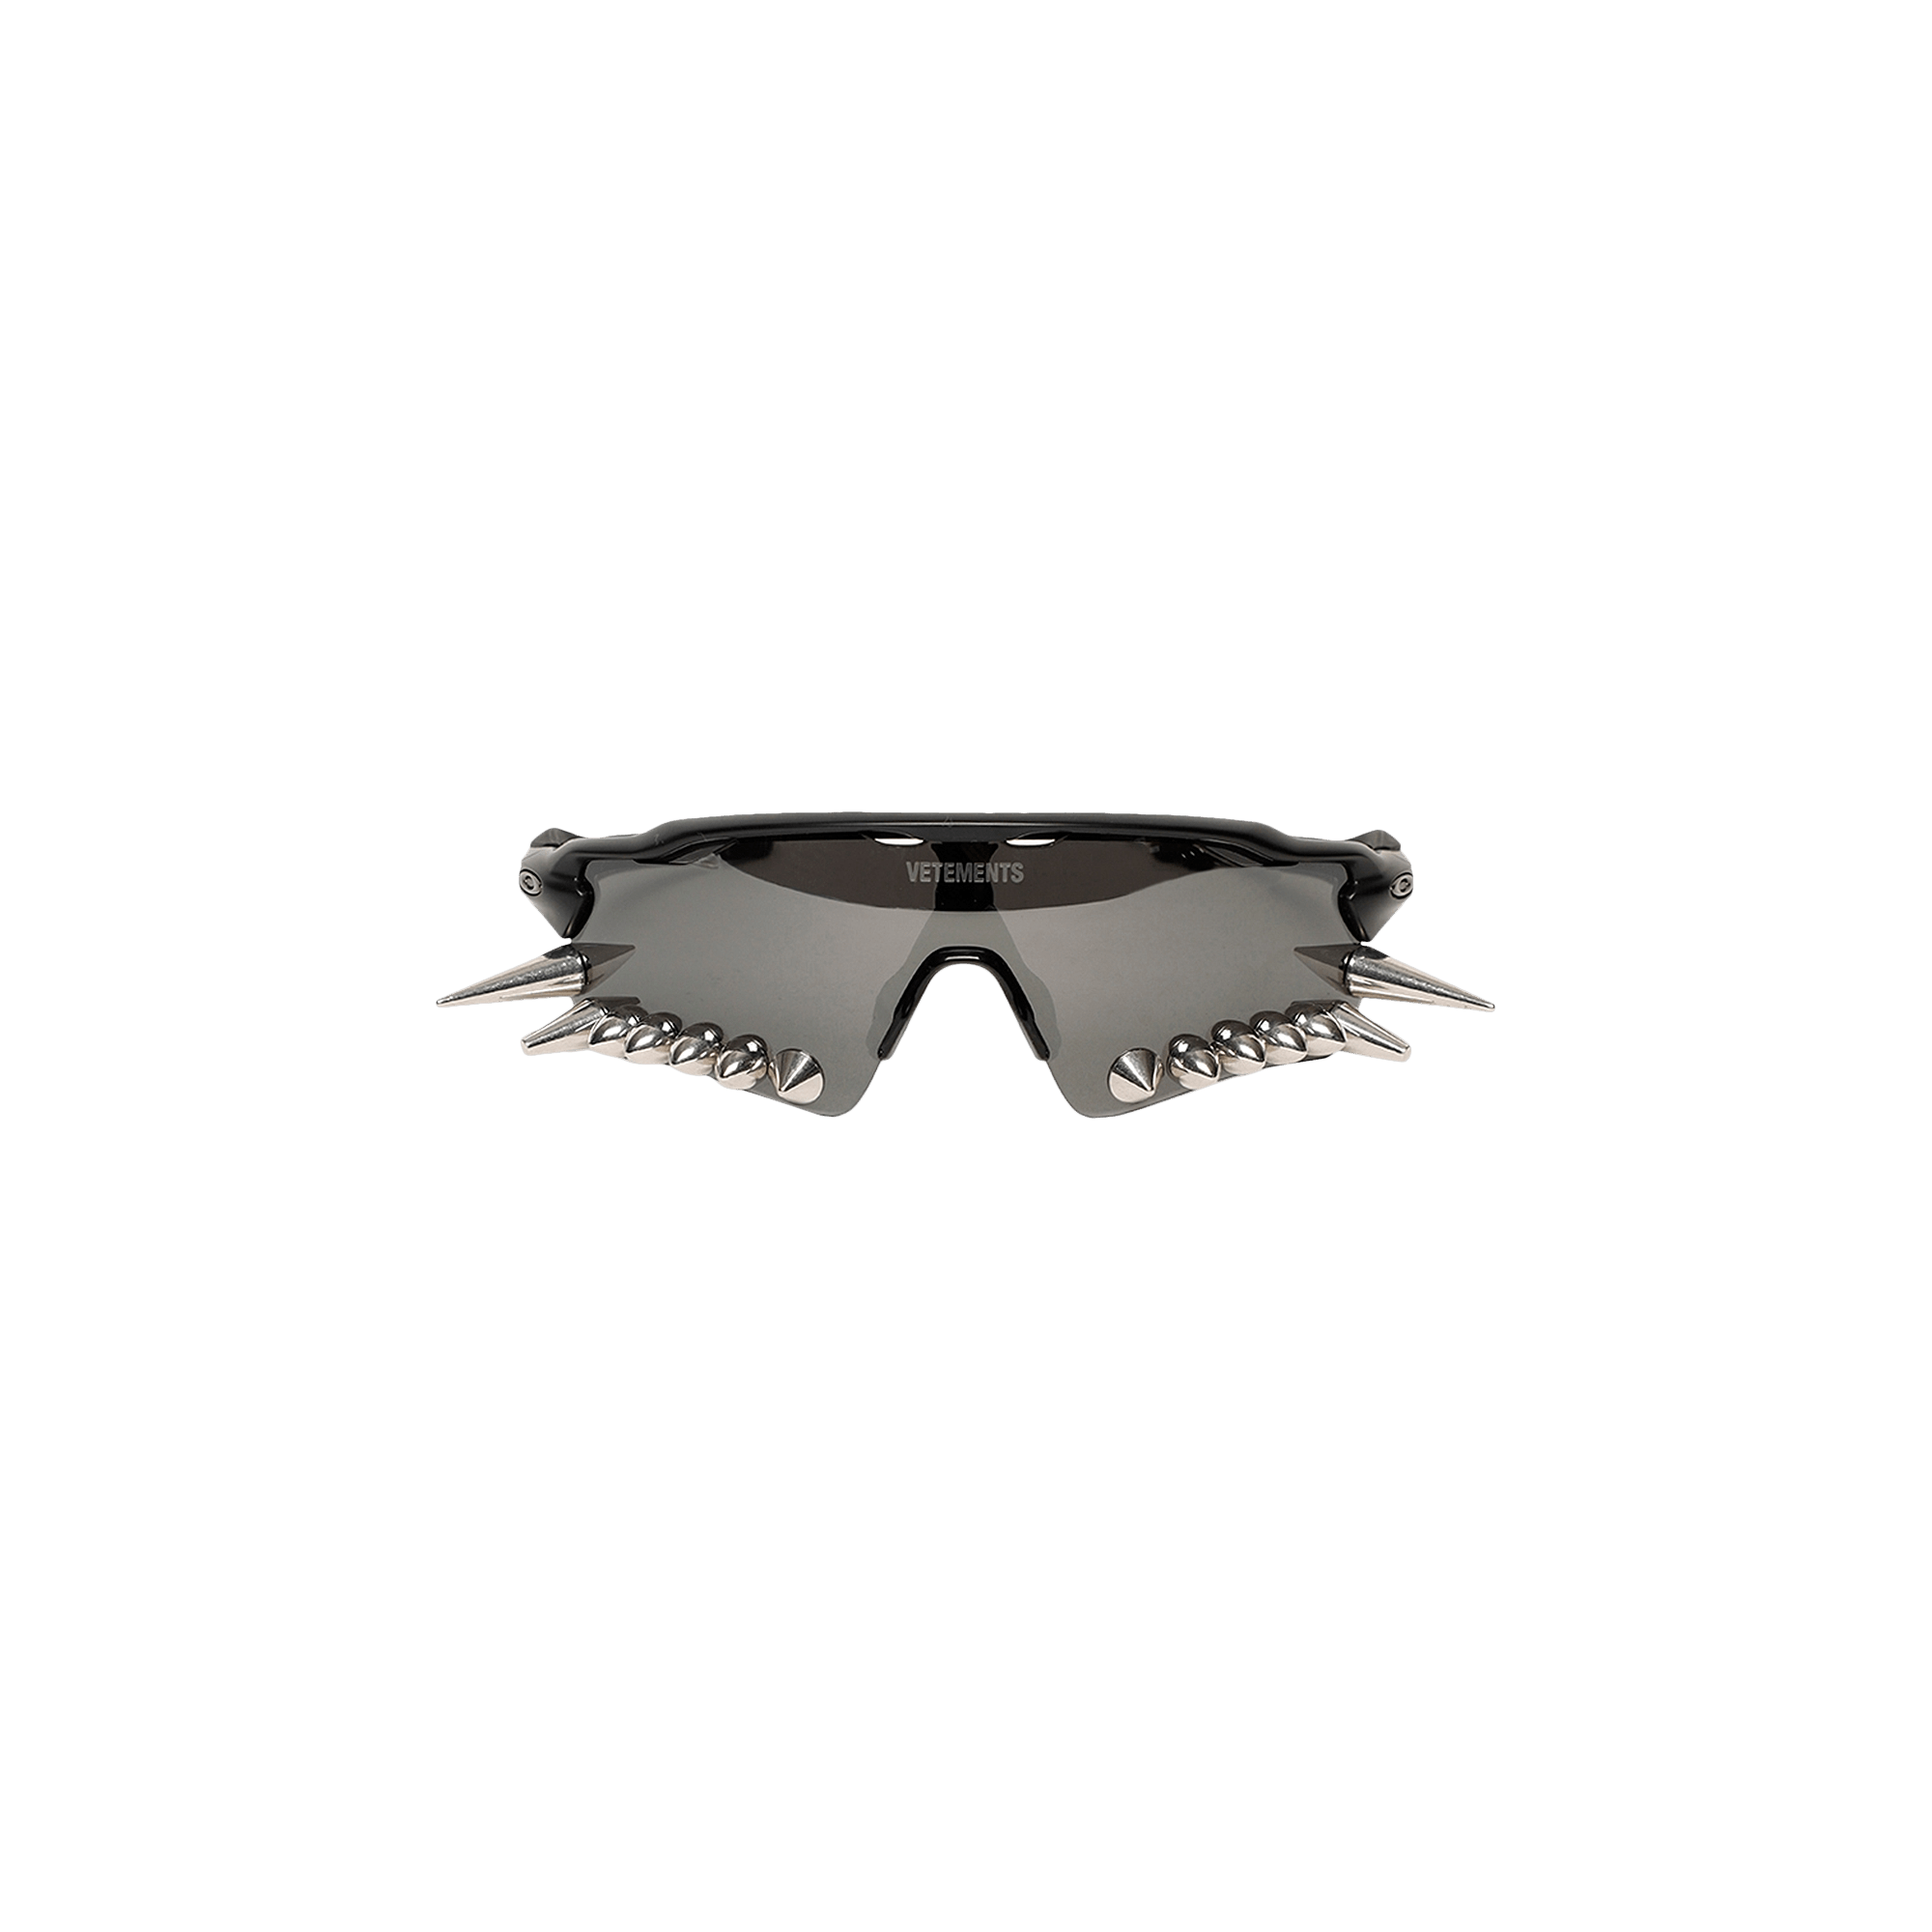 Vetements x Oakley Spikes 400 Sunglasses 'Black/Silver'